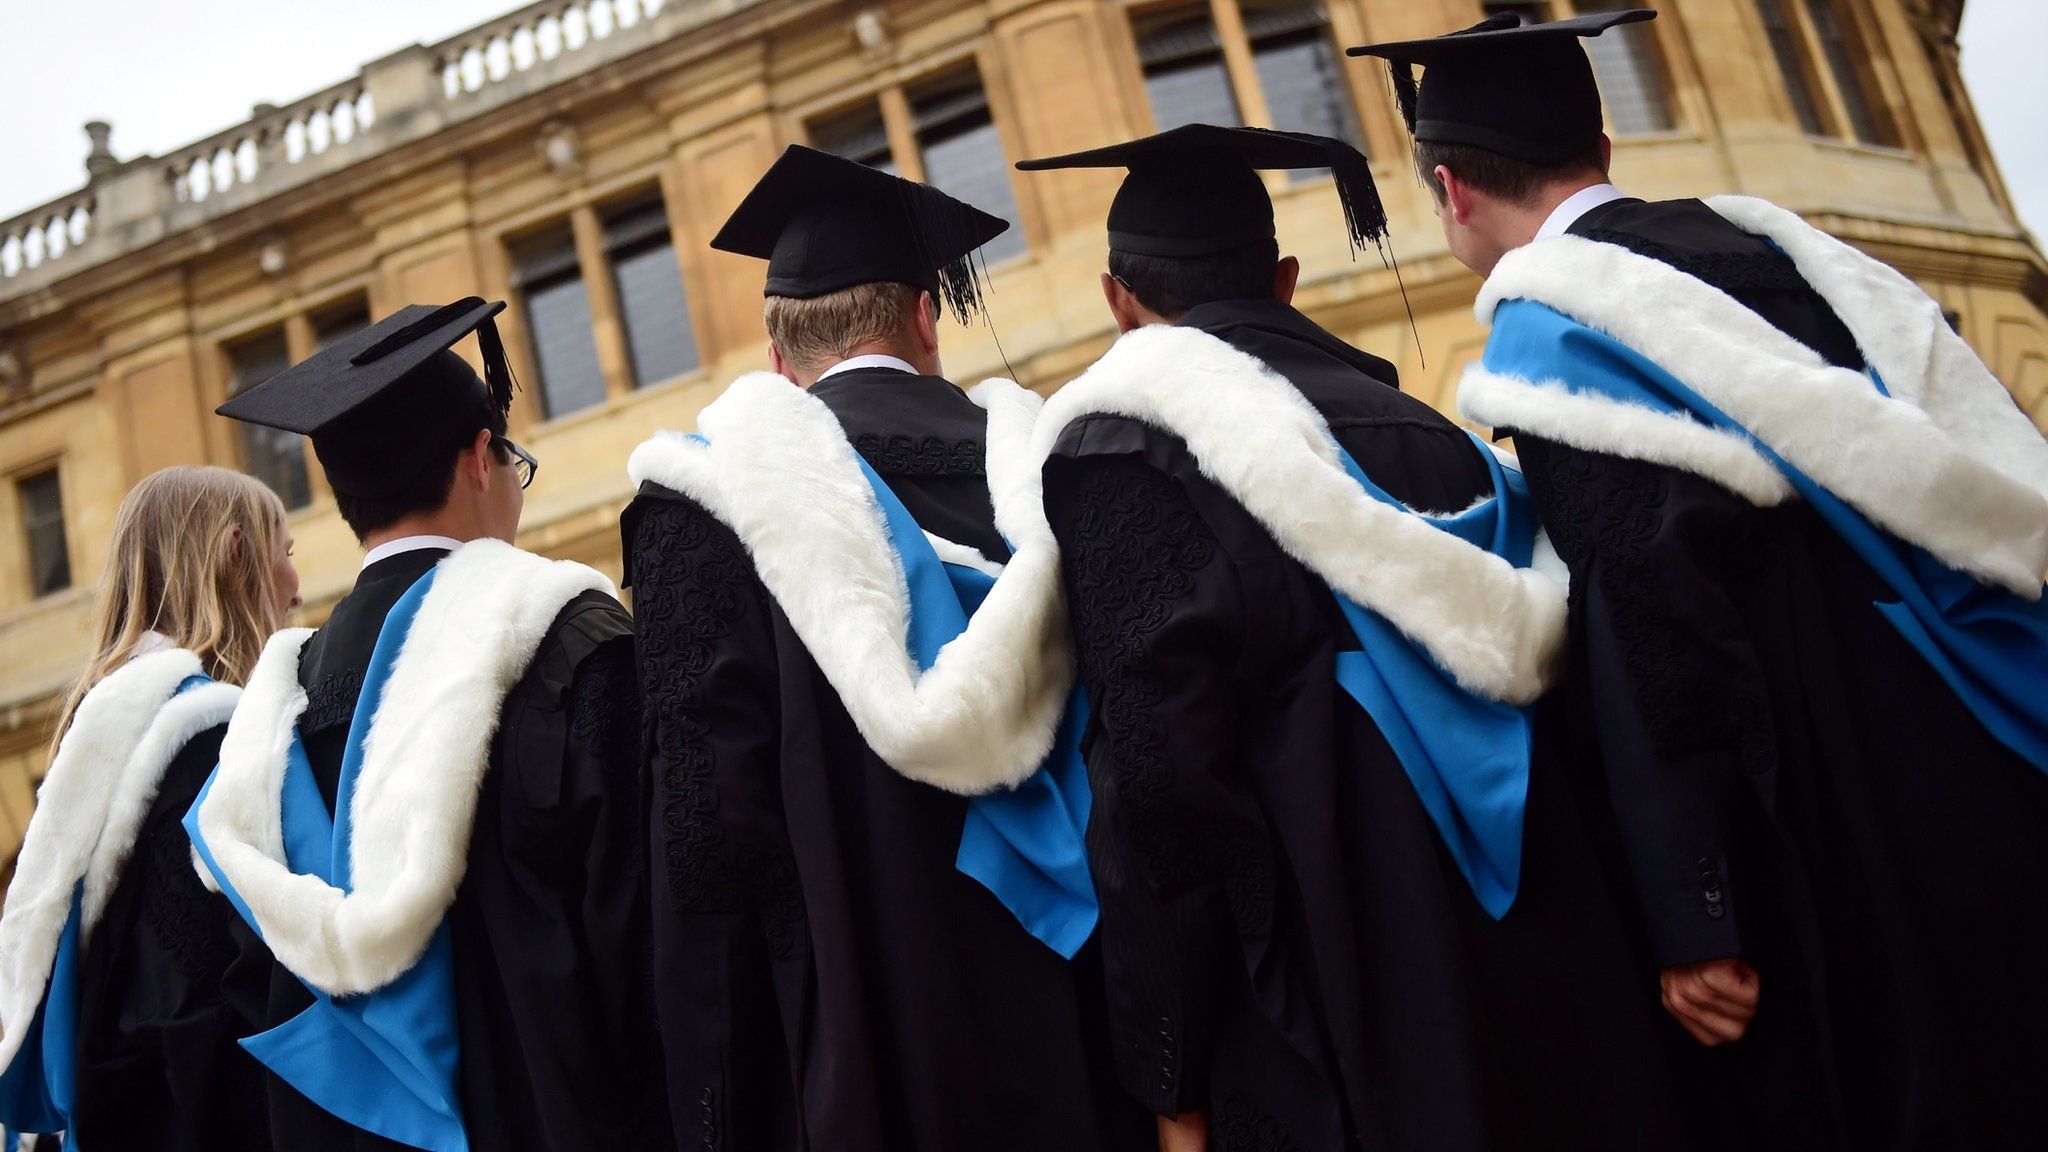 Students after Oxford University graduation